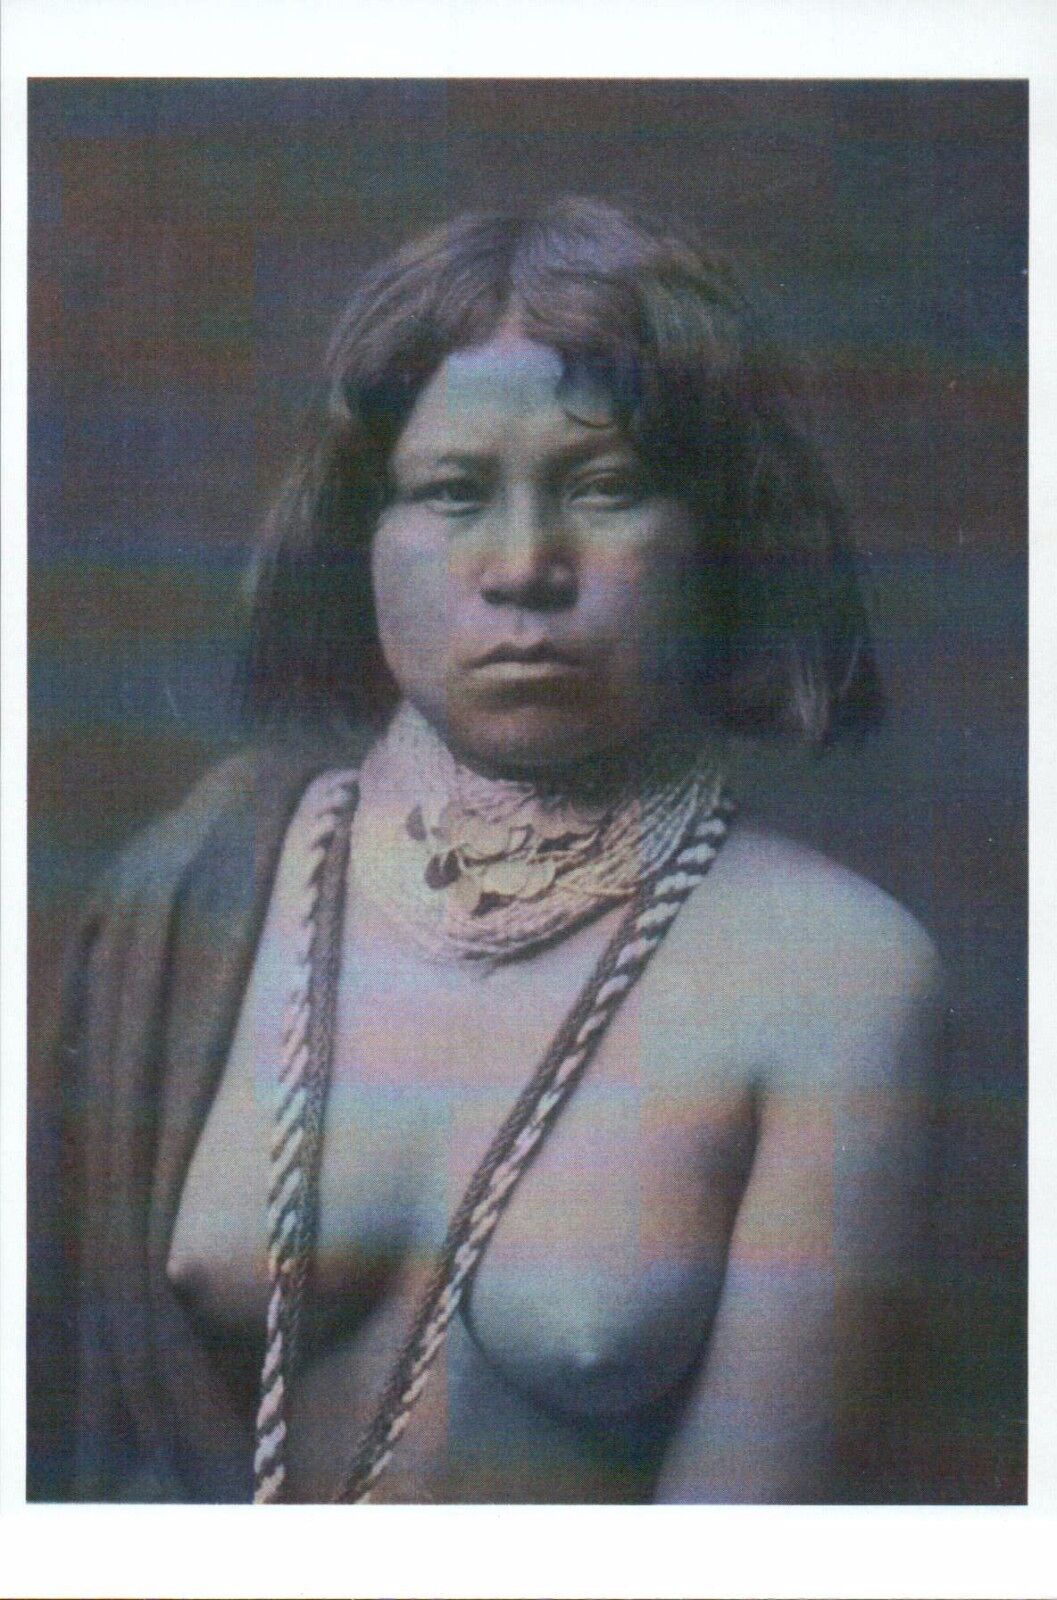 anil vaghela share american indian woman nude photos